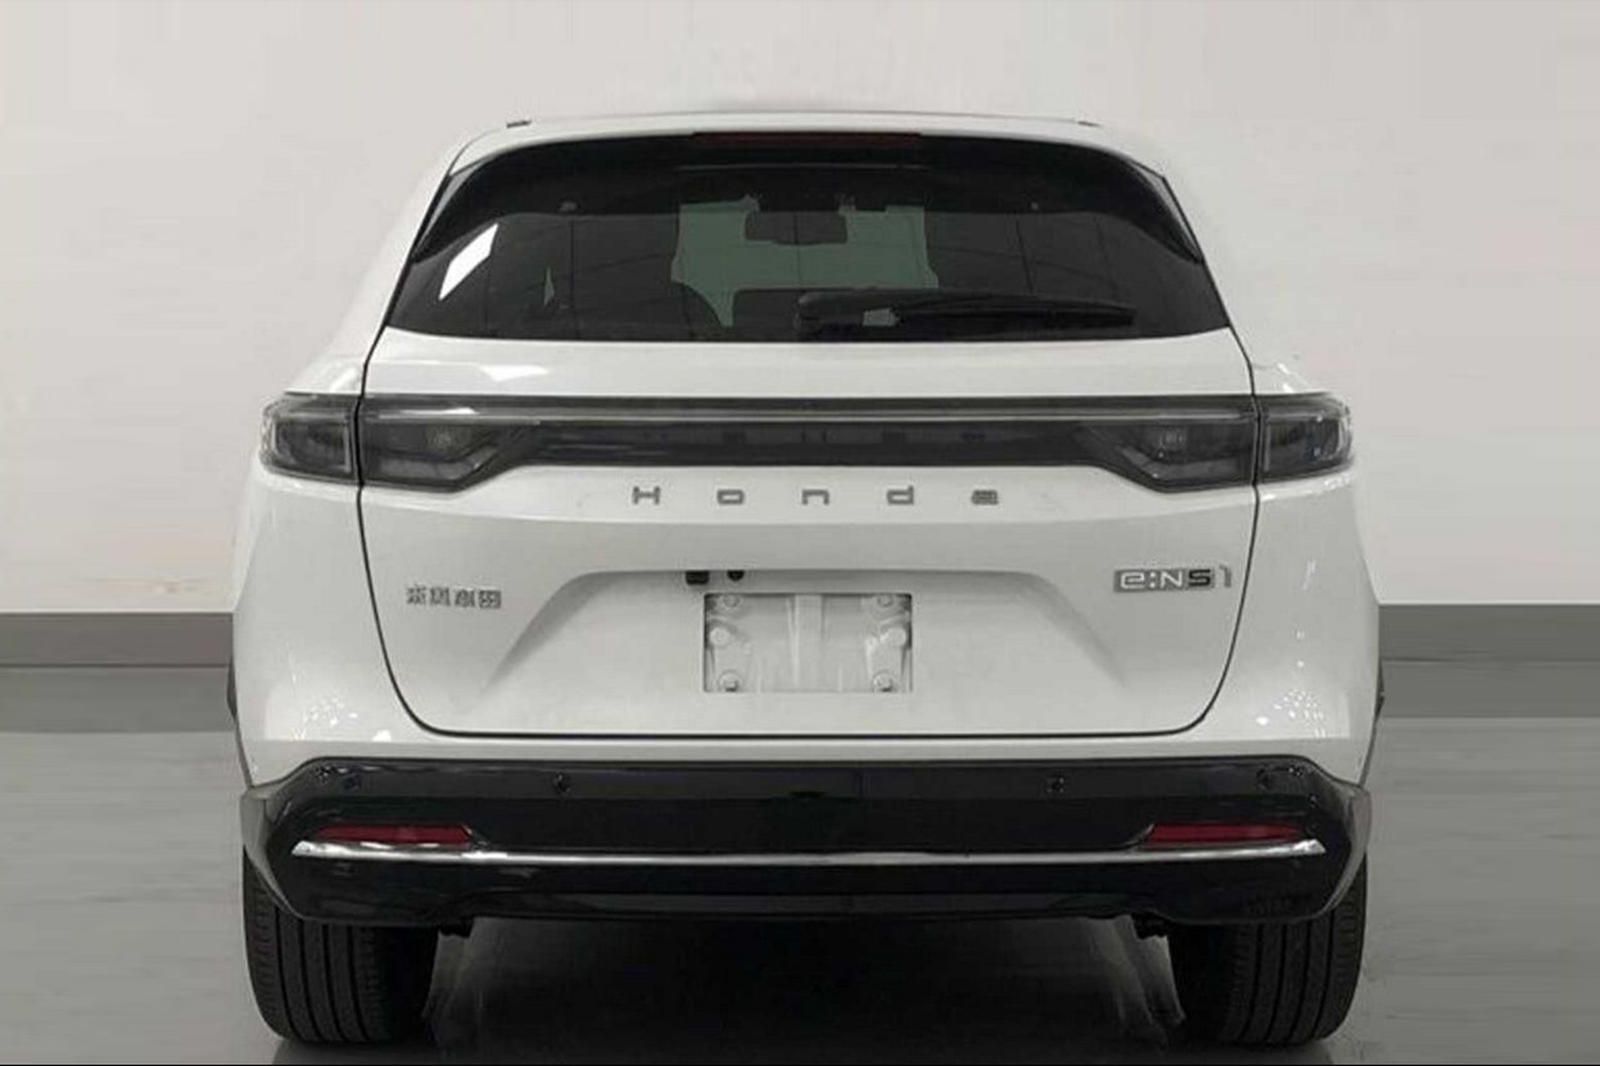 Honda HR-V Electric Rear View